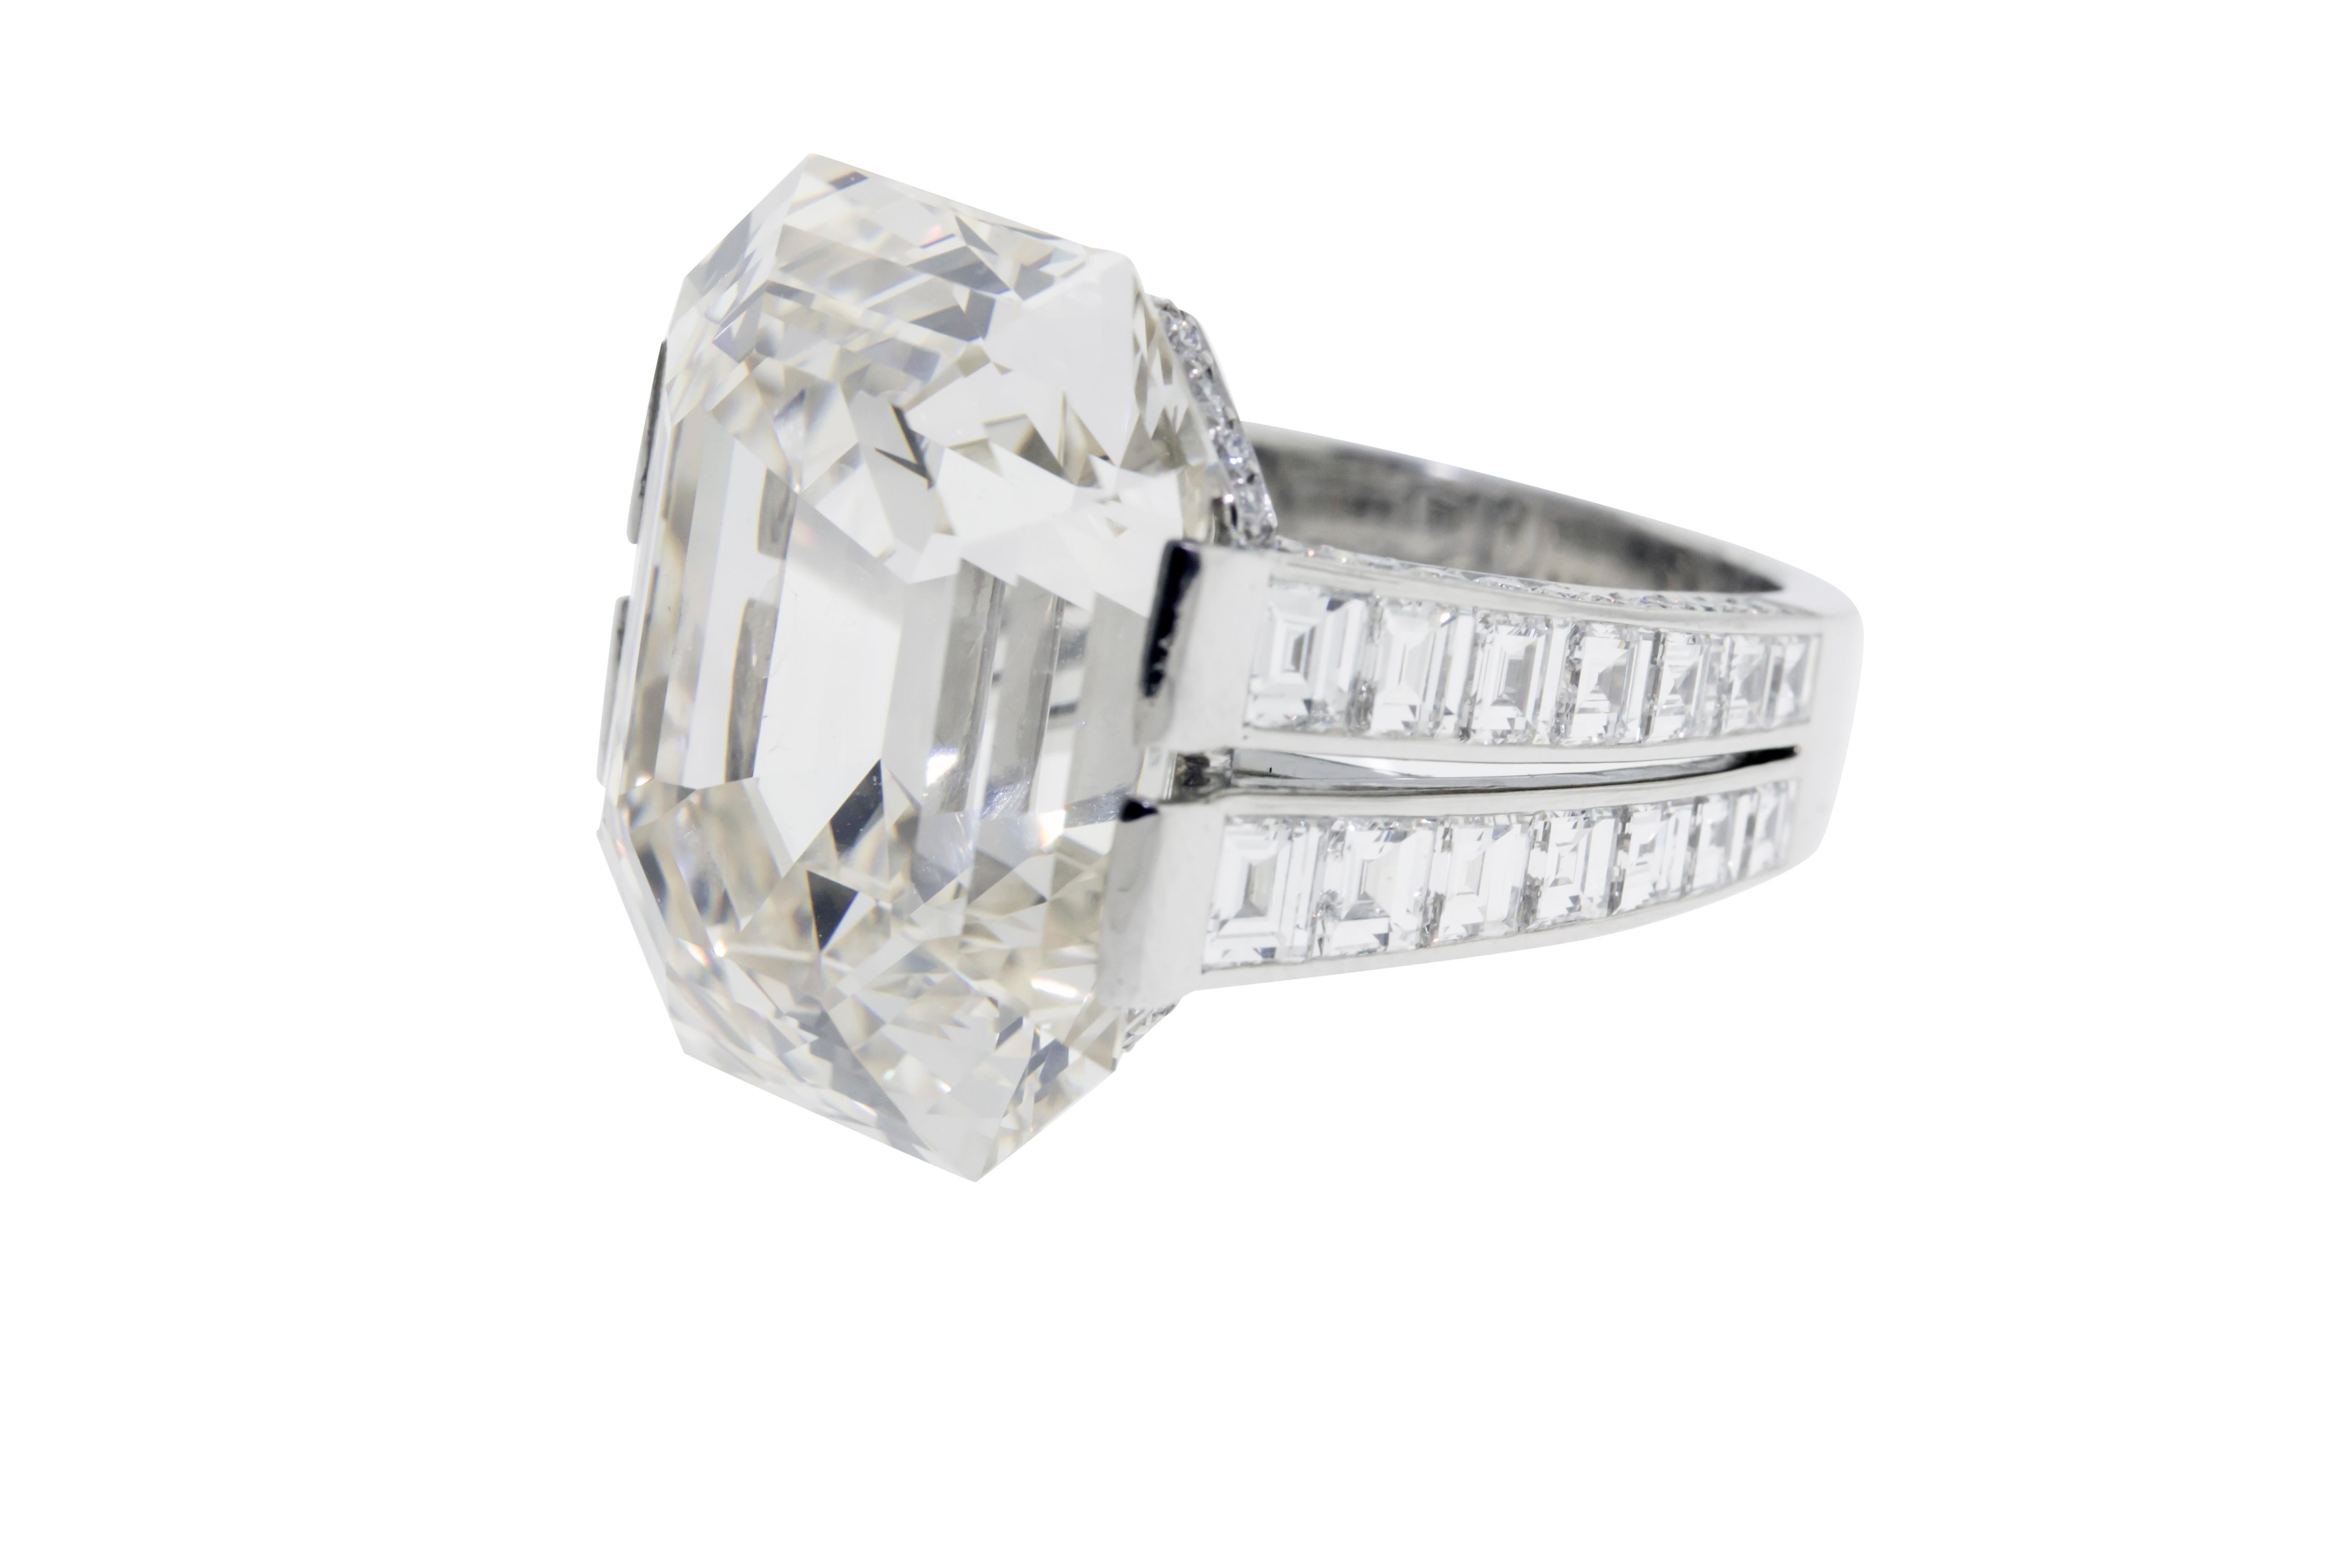 Modern Cartier Monture 30.03 Carat GIA Certified Emerald Cut Diamond Engagement Ring